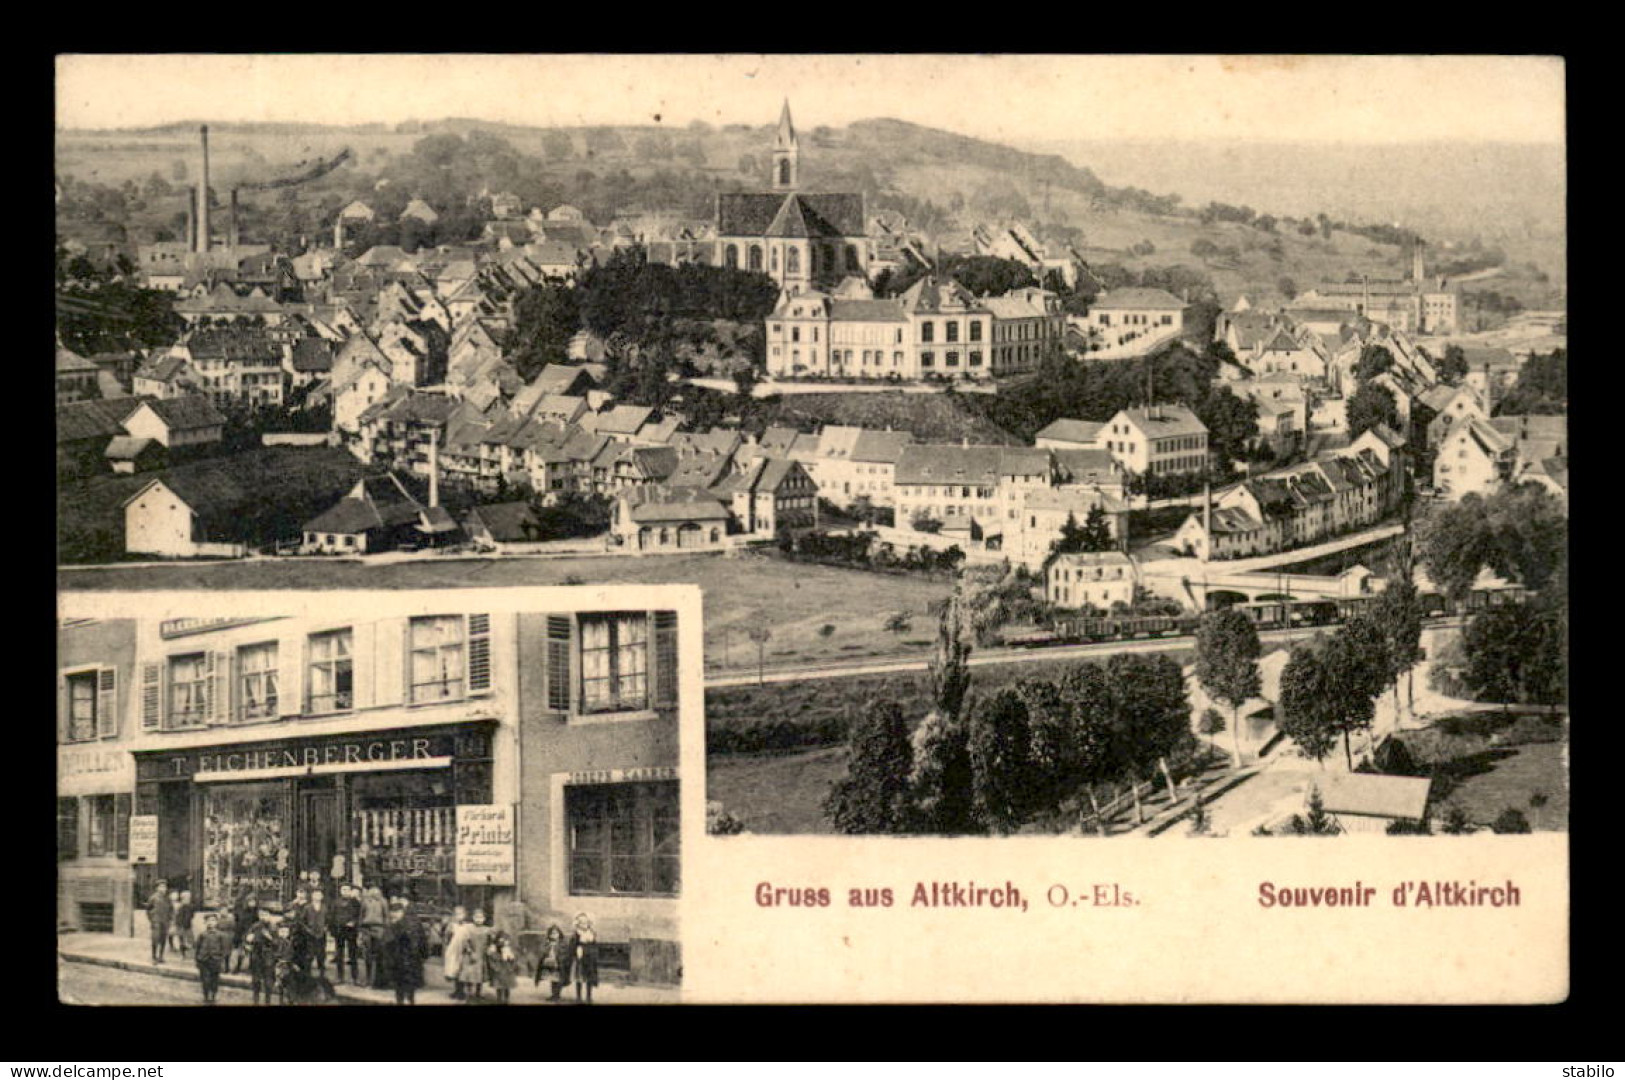 68 - ALTKIRCH - SOUVENIR - VUE GENERALE ET MAGASIN T. EICHENBERGER - JUDAISME ? - Altkirch